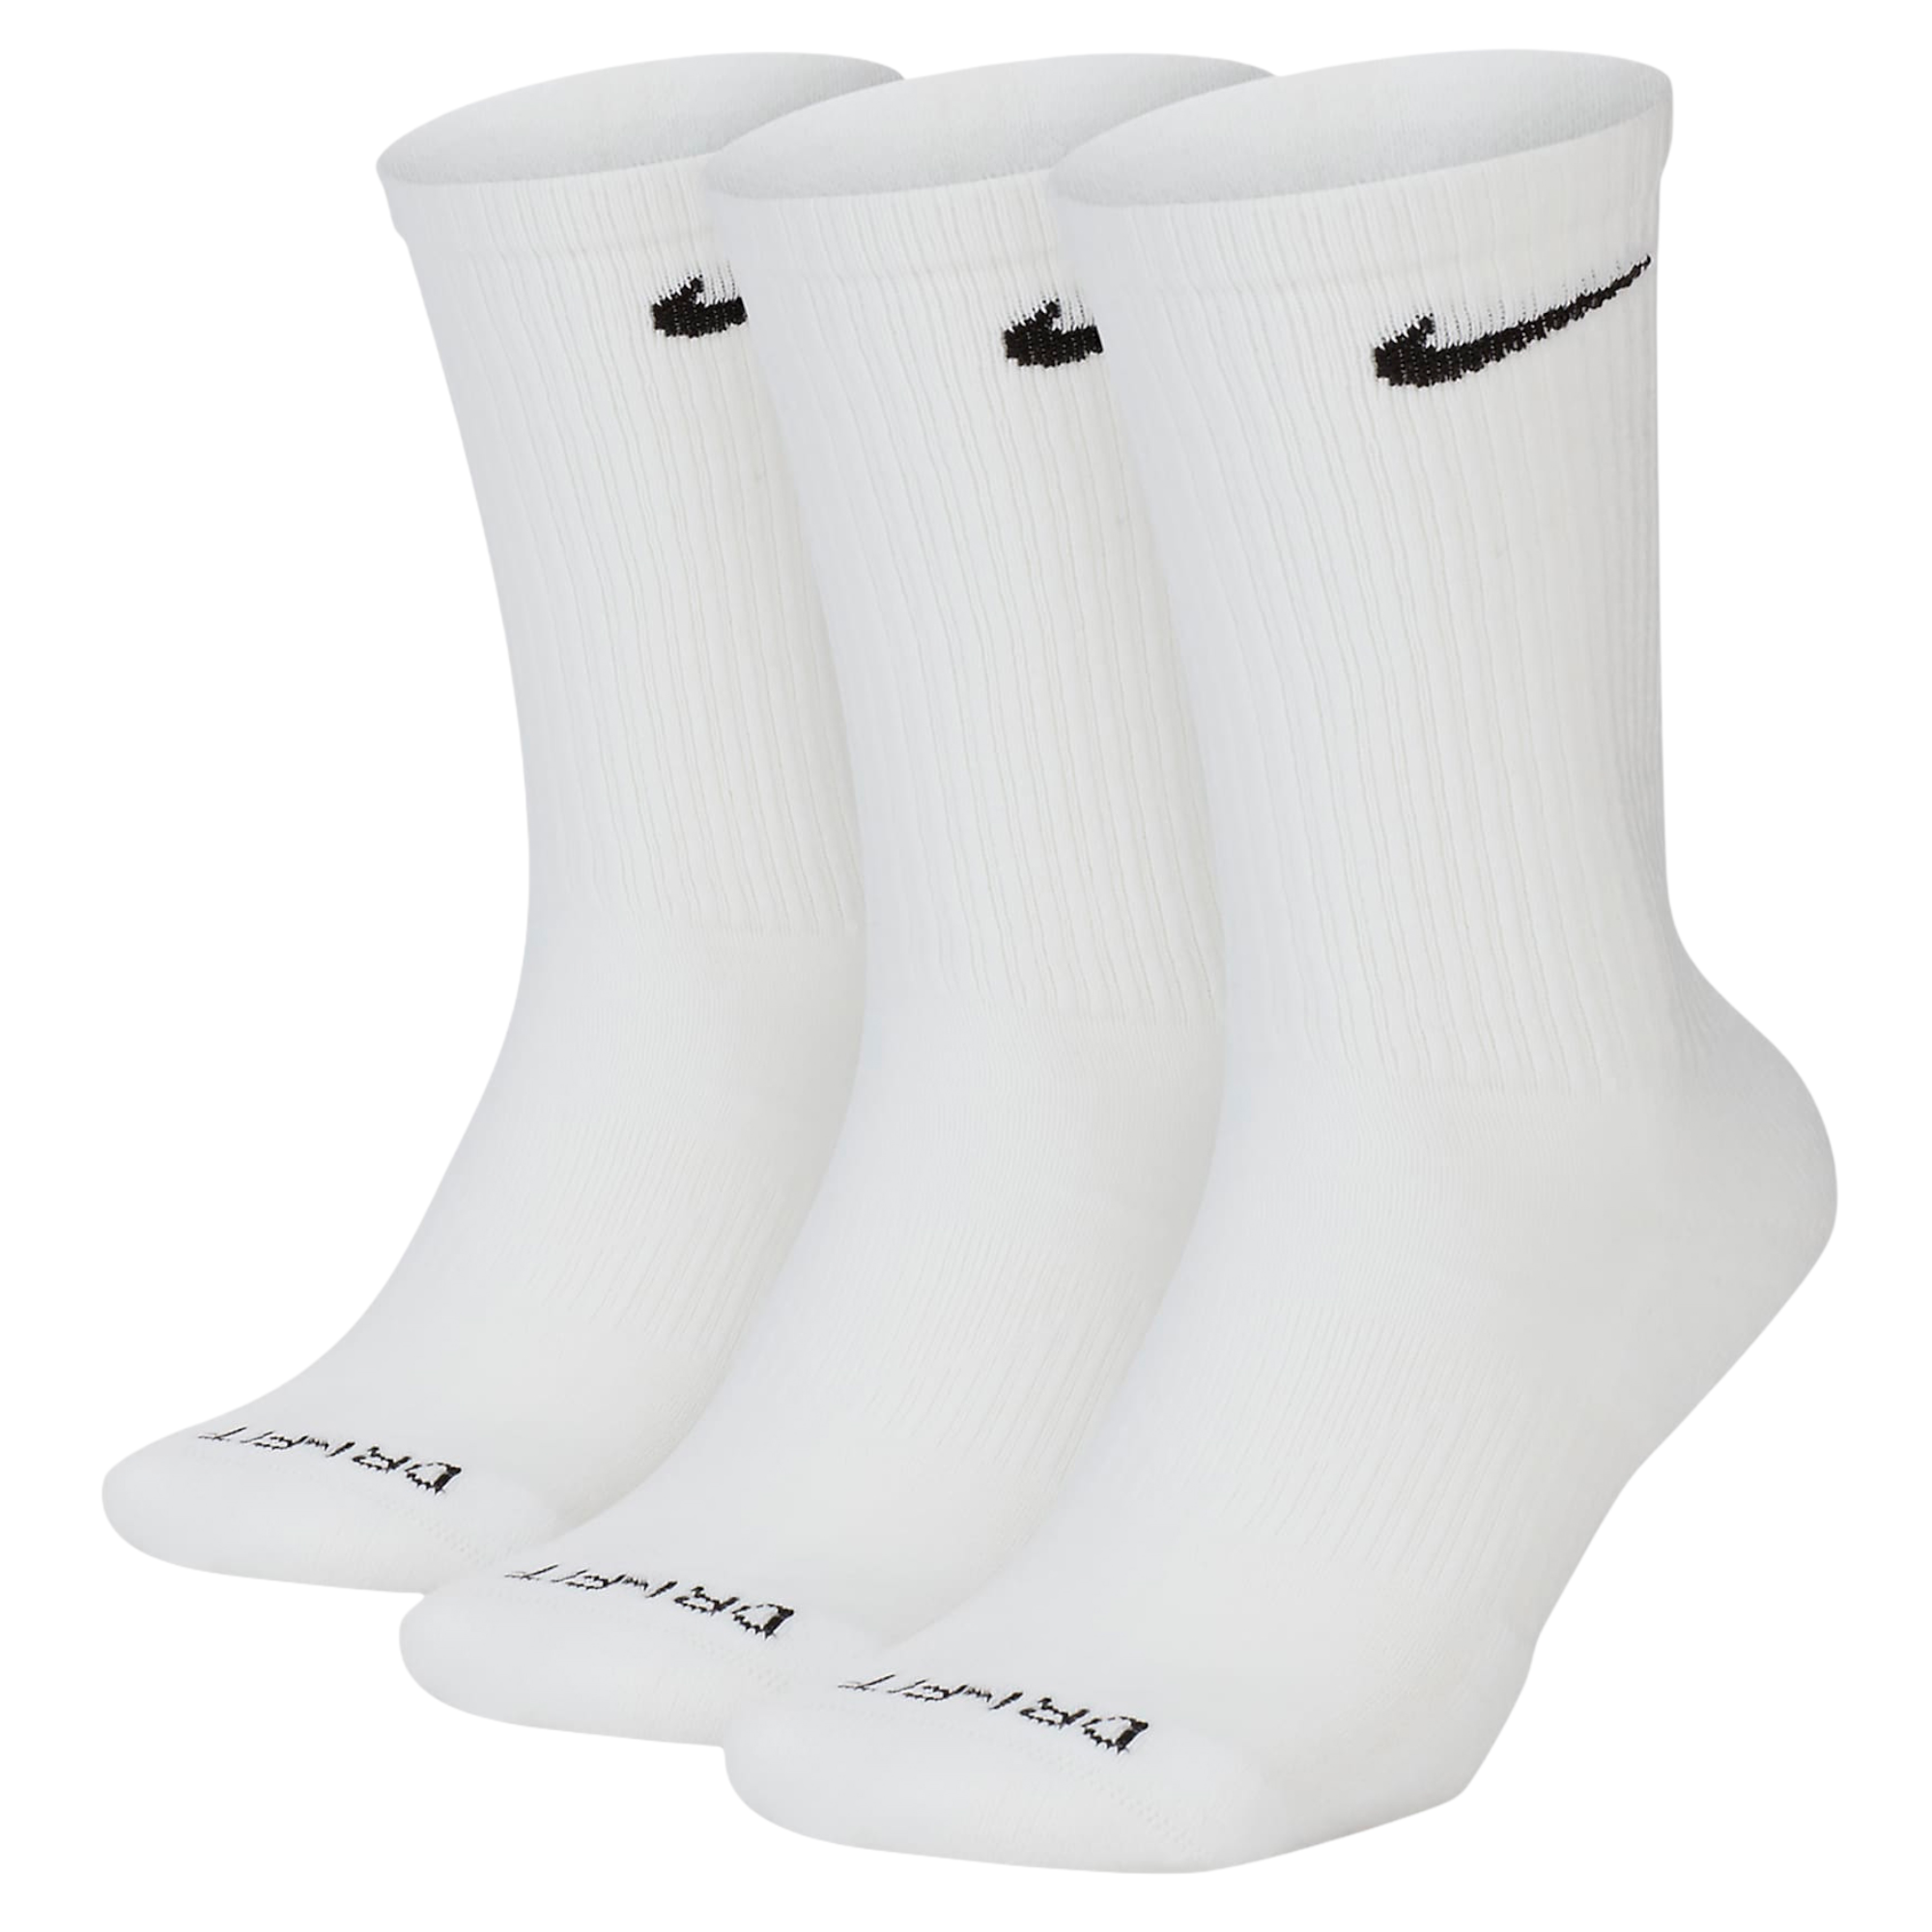 Nike SB Everyday Plus Crew Socks White 3 Pack - Orchard